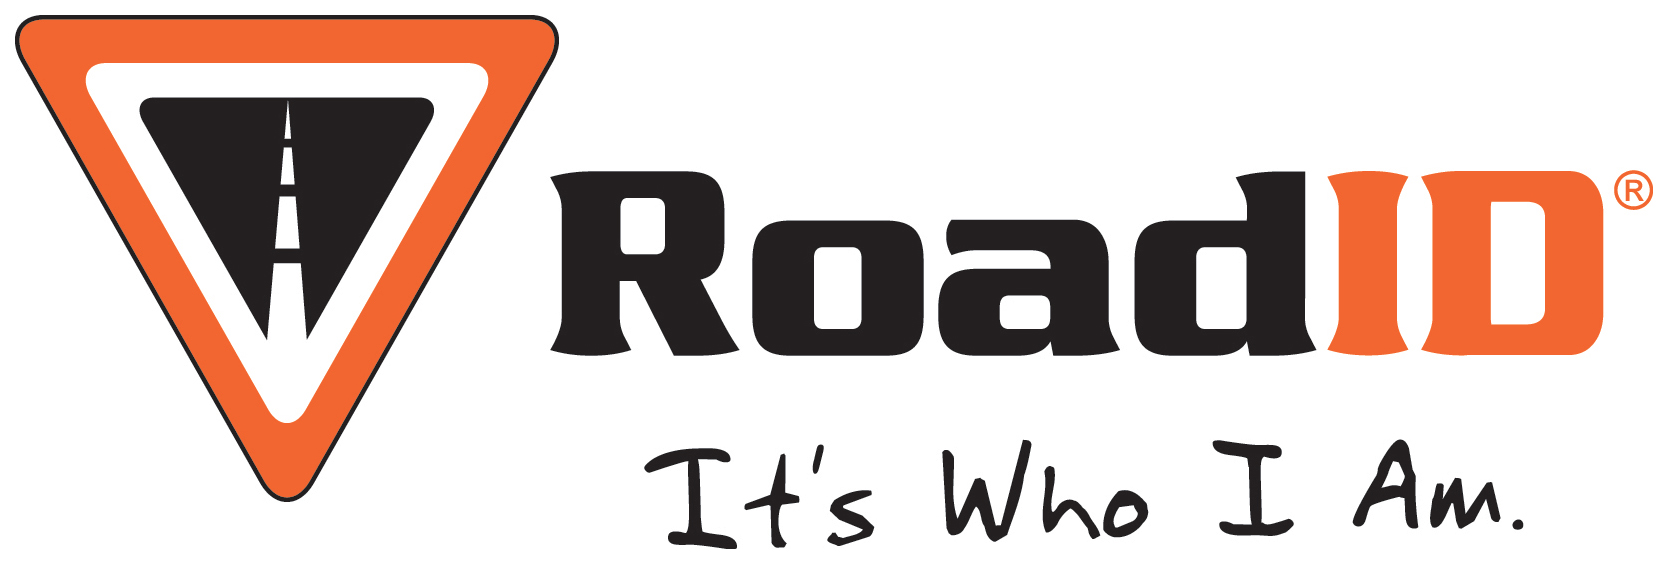 roadid_logo.jpg